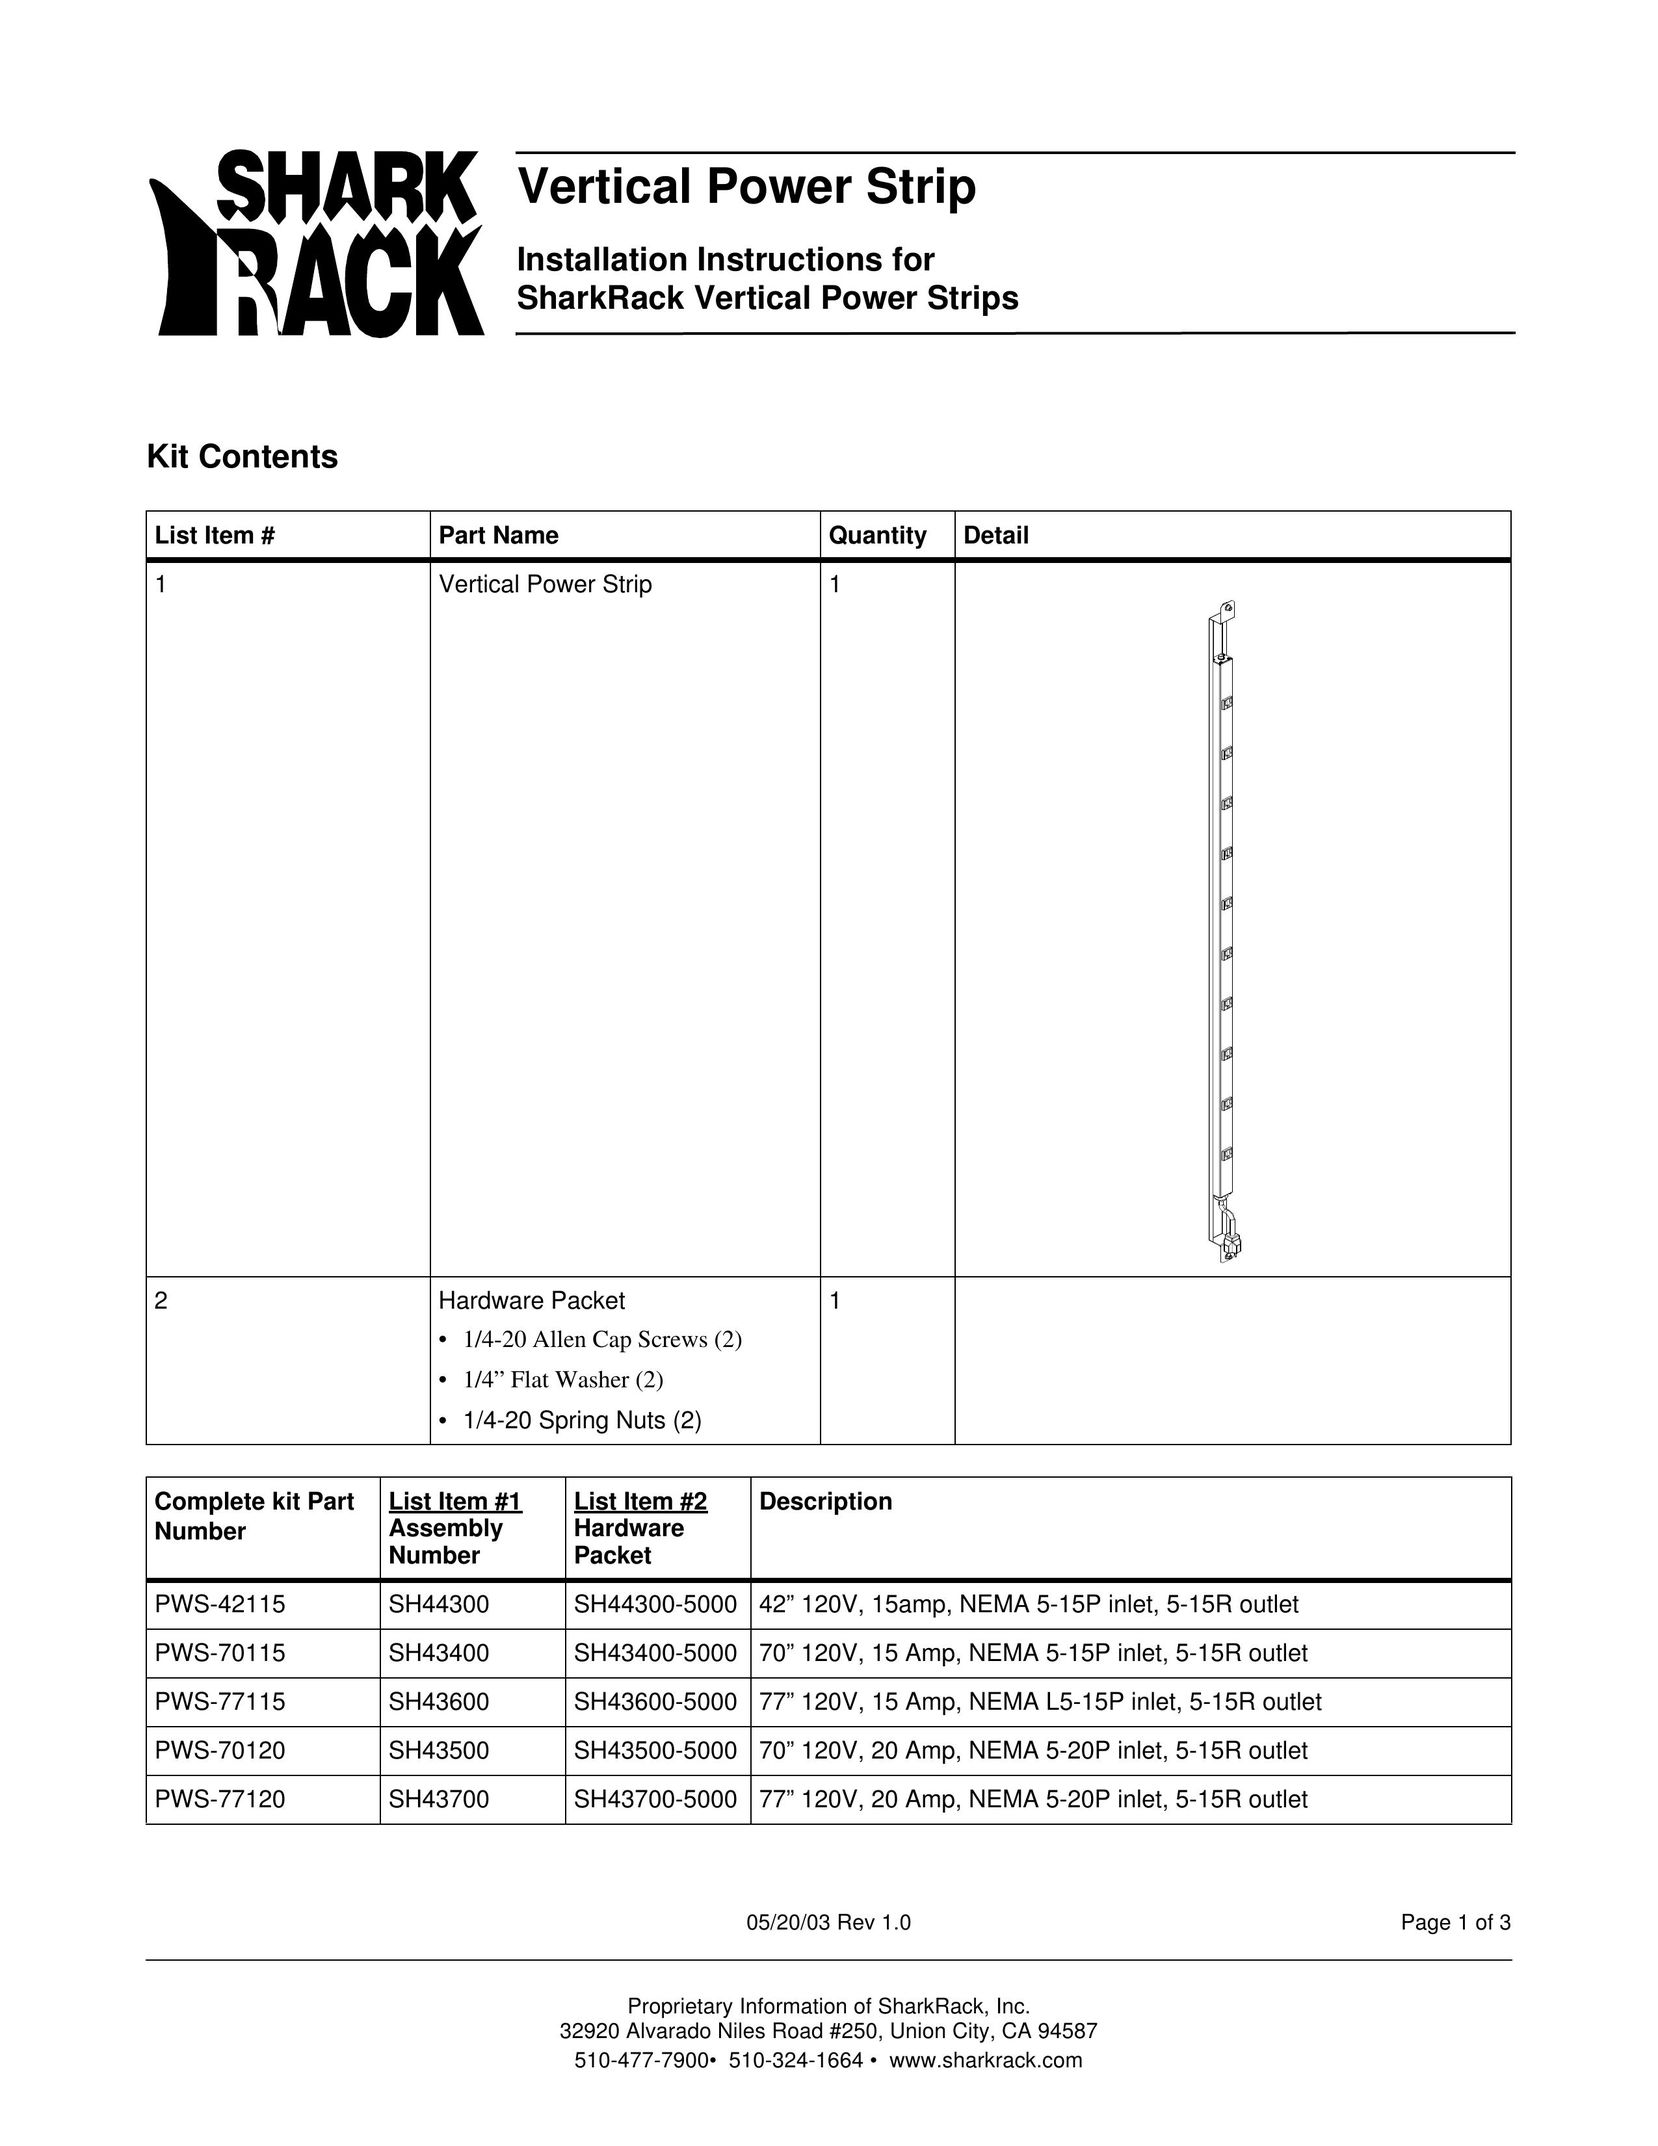 SharkRack PWS-77115 Surge Protector User Manual